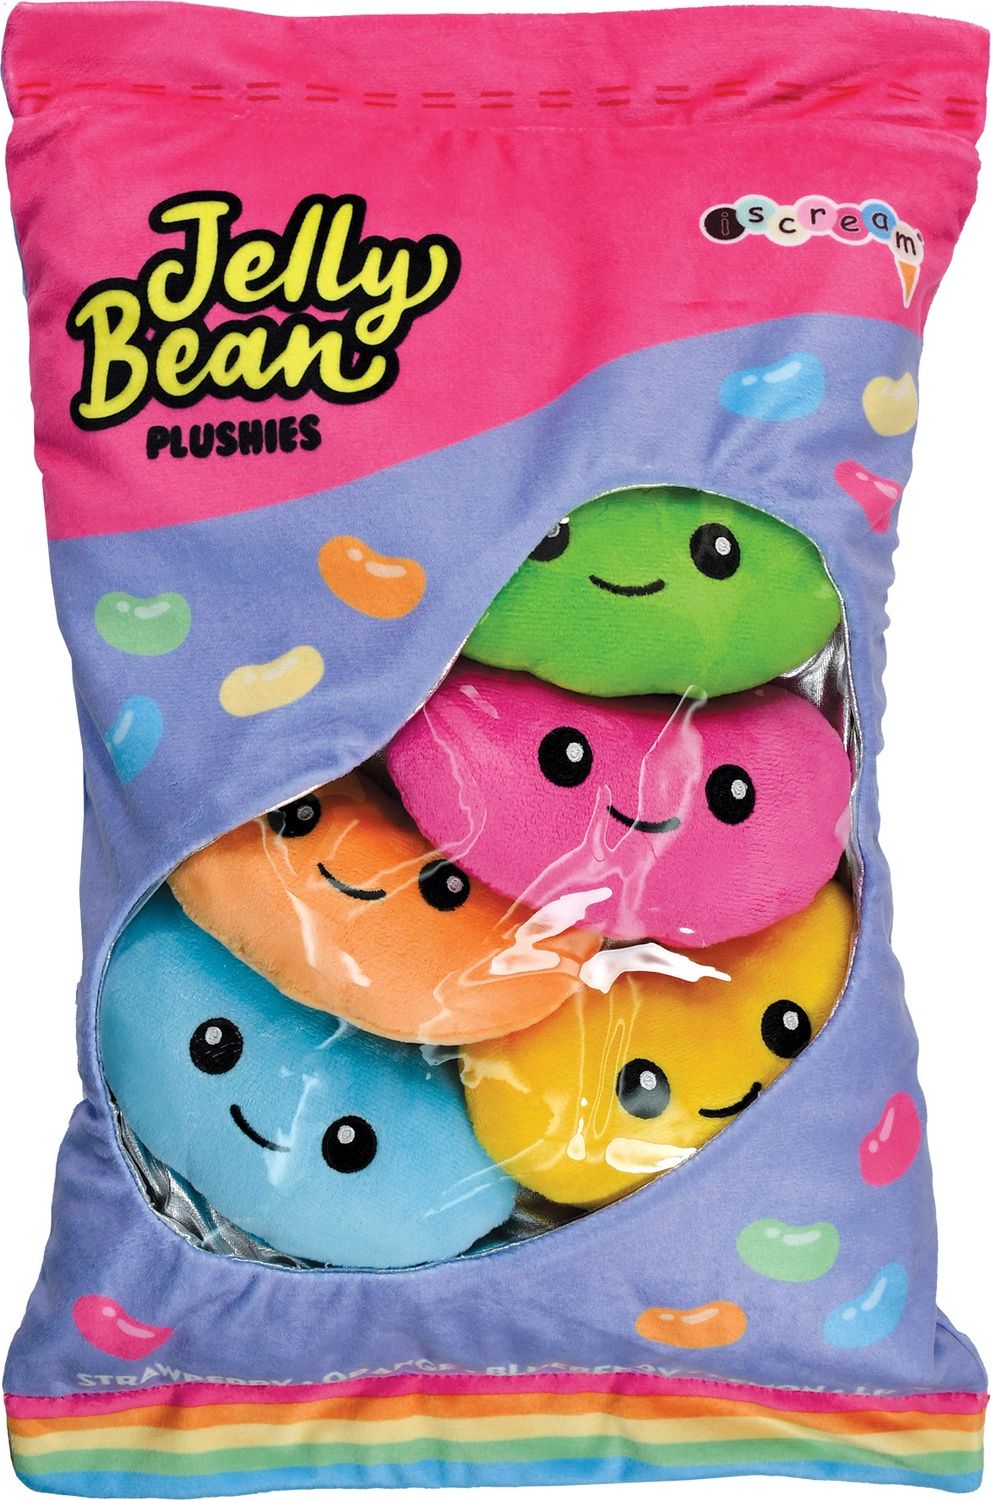 Jelly bean plush